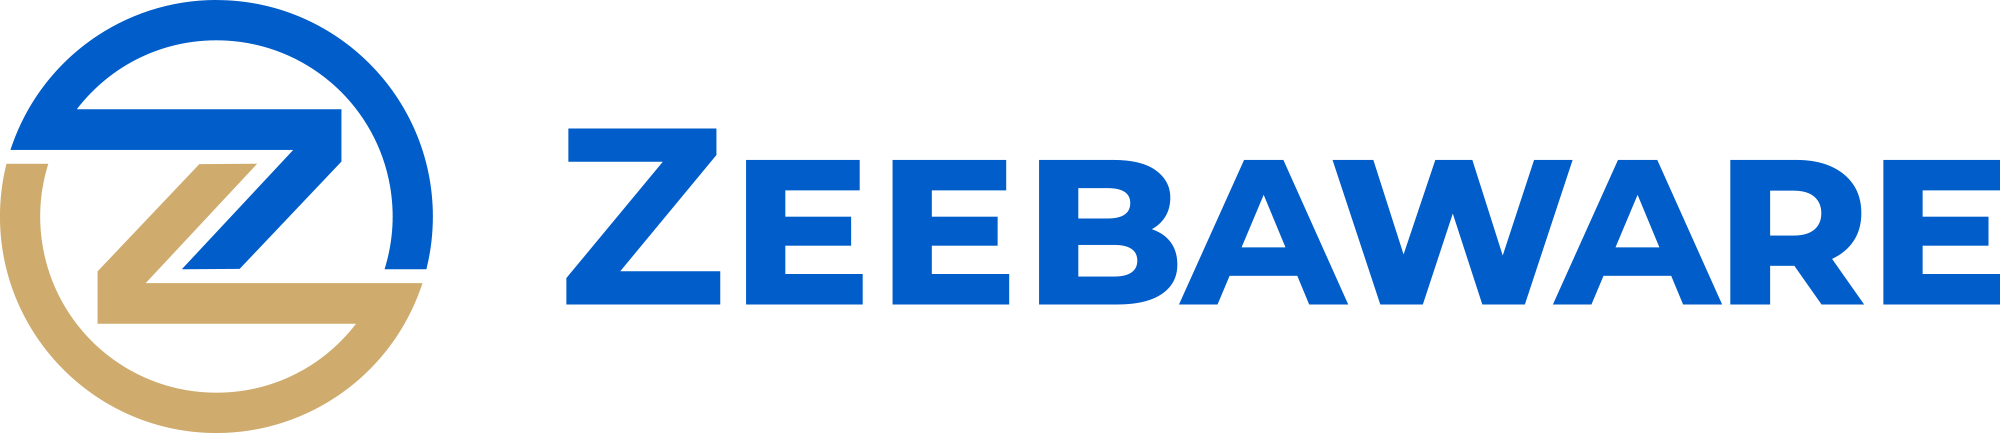 Zeebaware logo